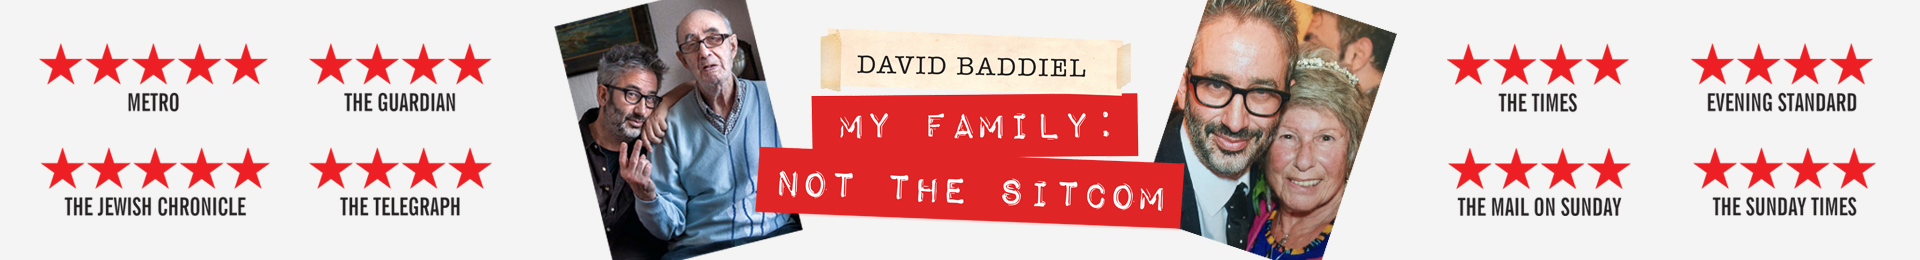 David Baddiel: My Family: Not The Sitcom tickets